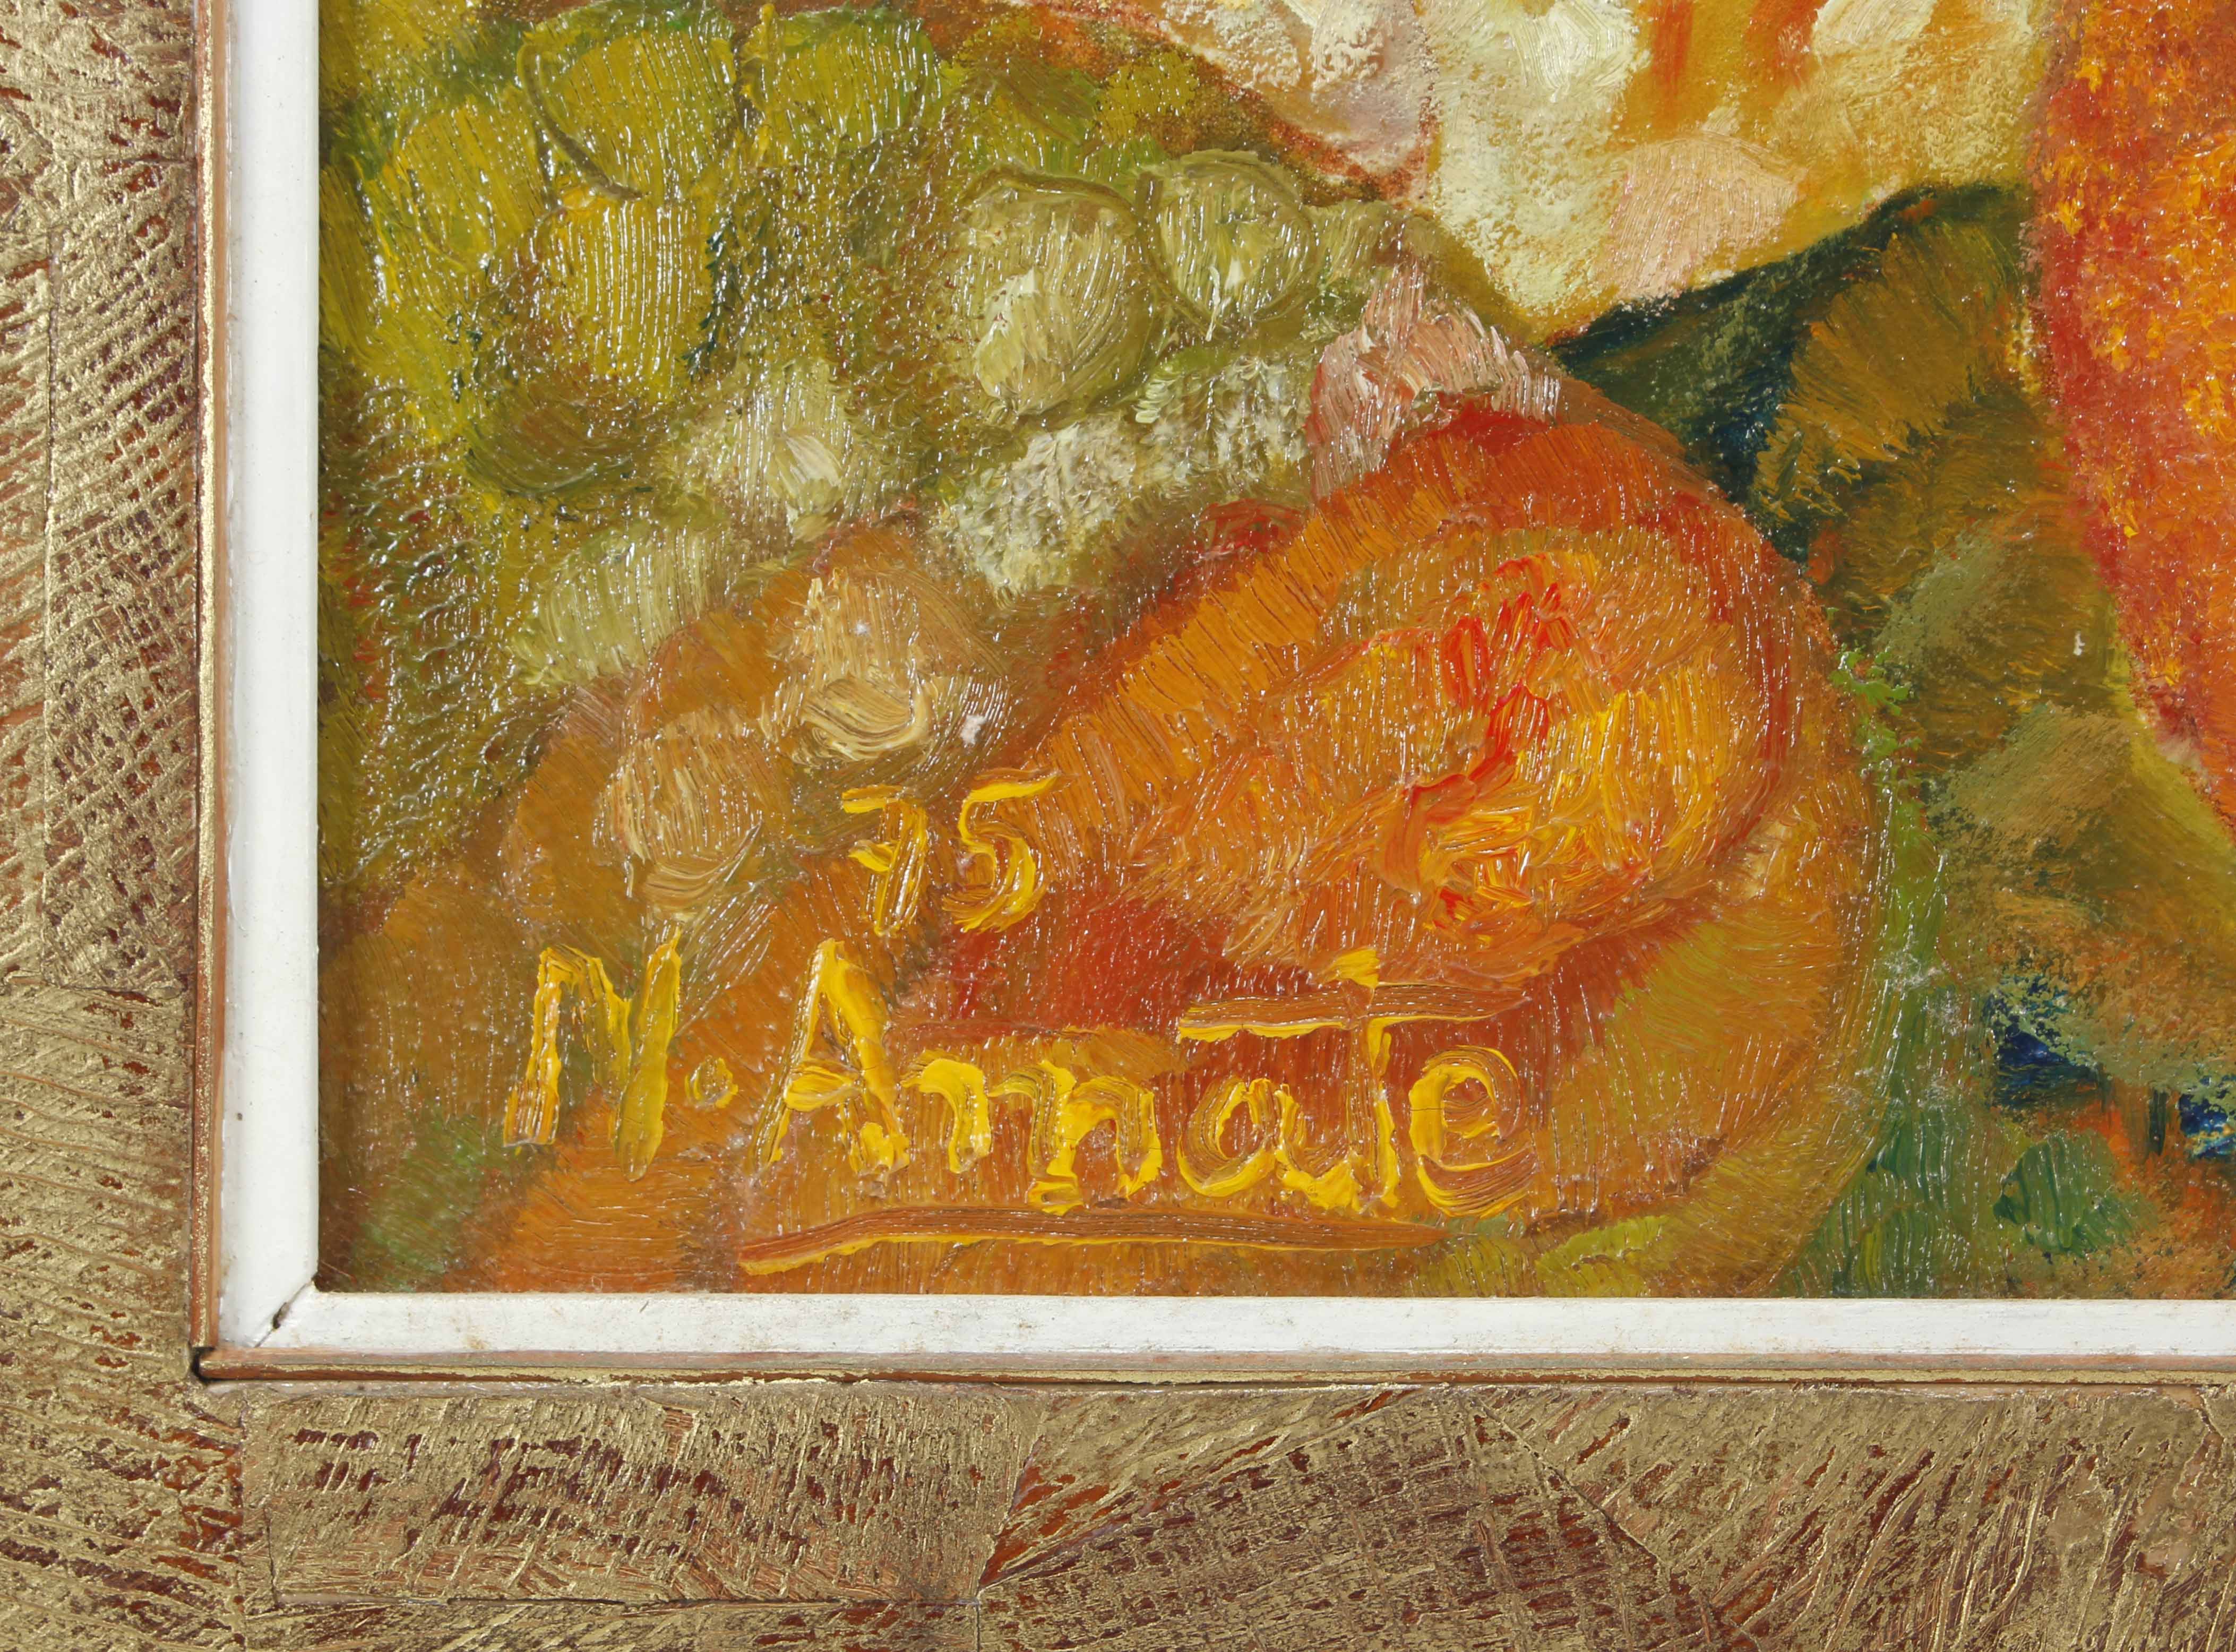 NICOLAU AMATE (1926-1998). "PAISAJE", 1975.